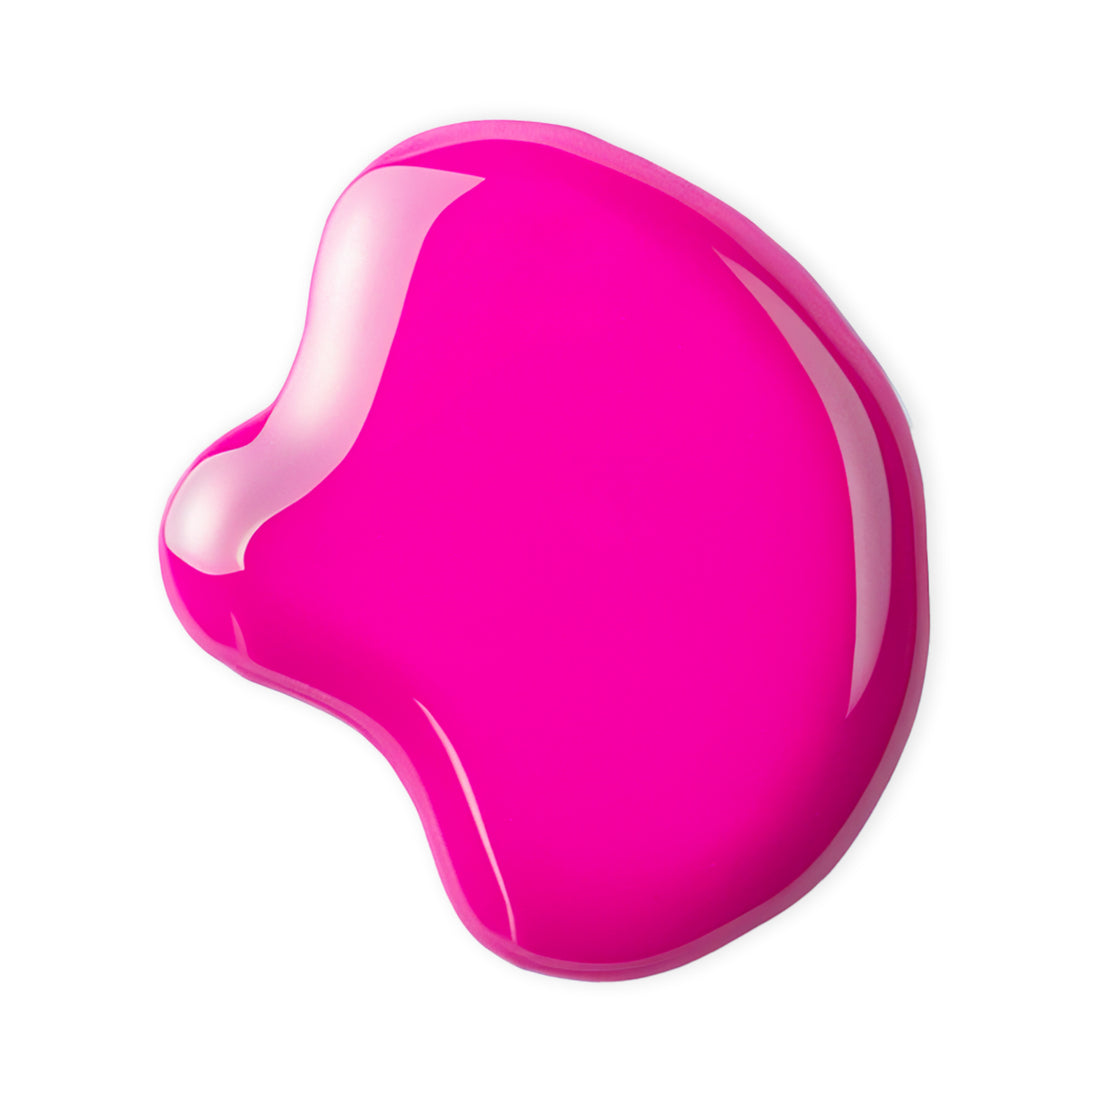 inuwet-neon-pink-bubble-gum-scent-for-kids-inuw-vinkv14